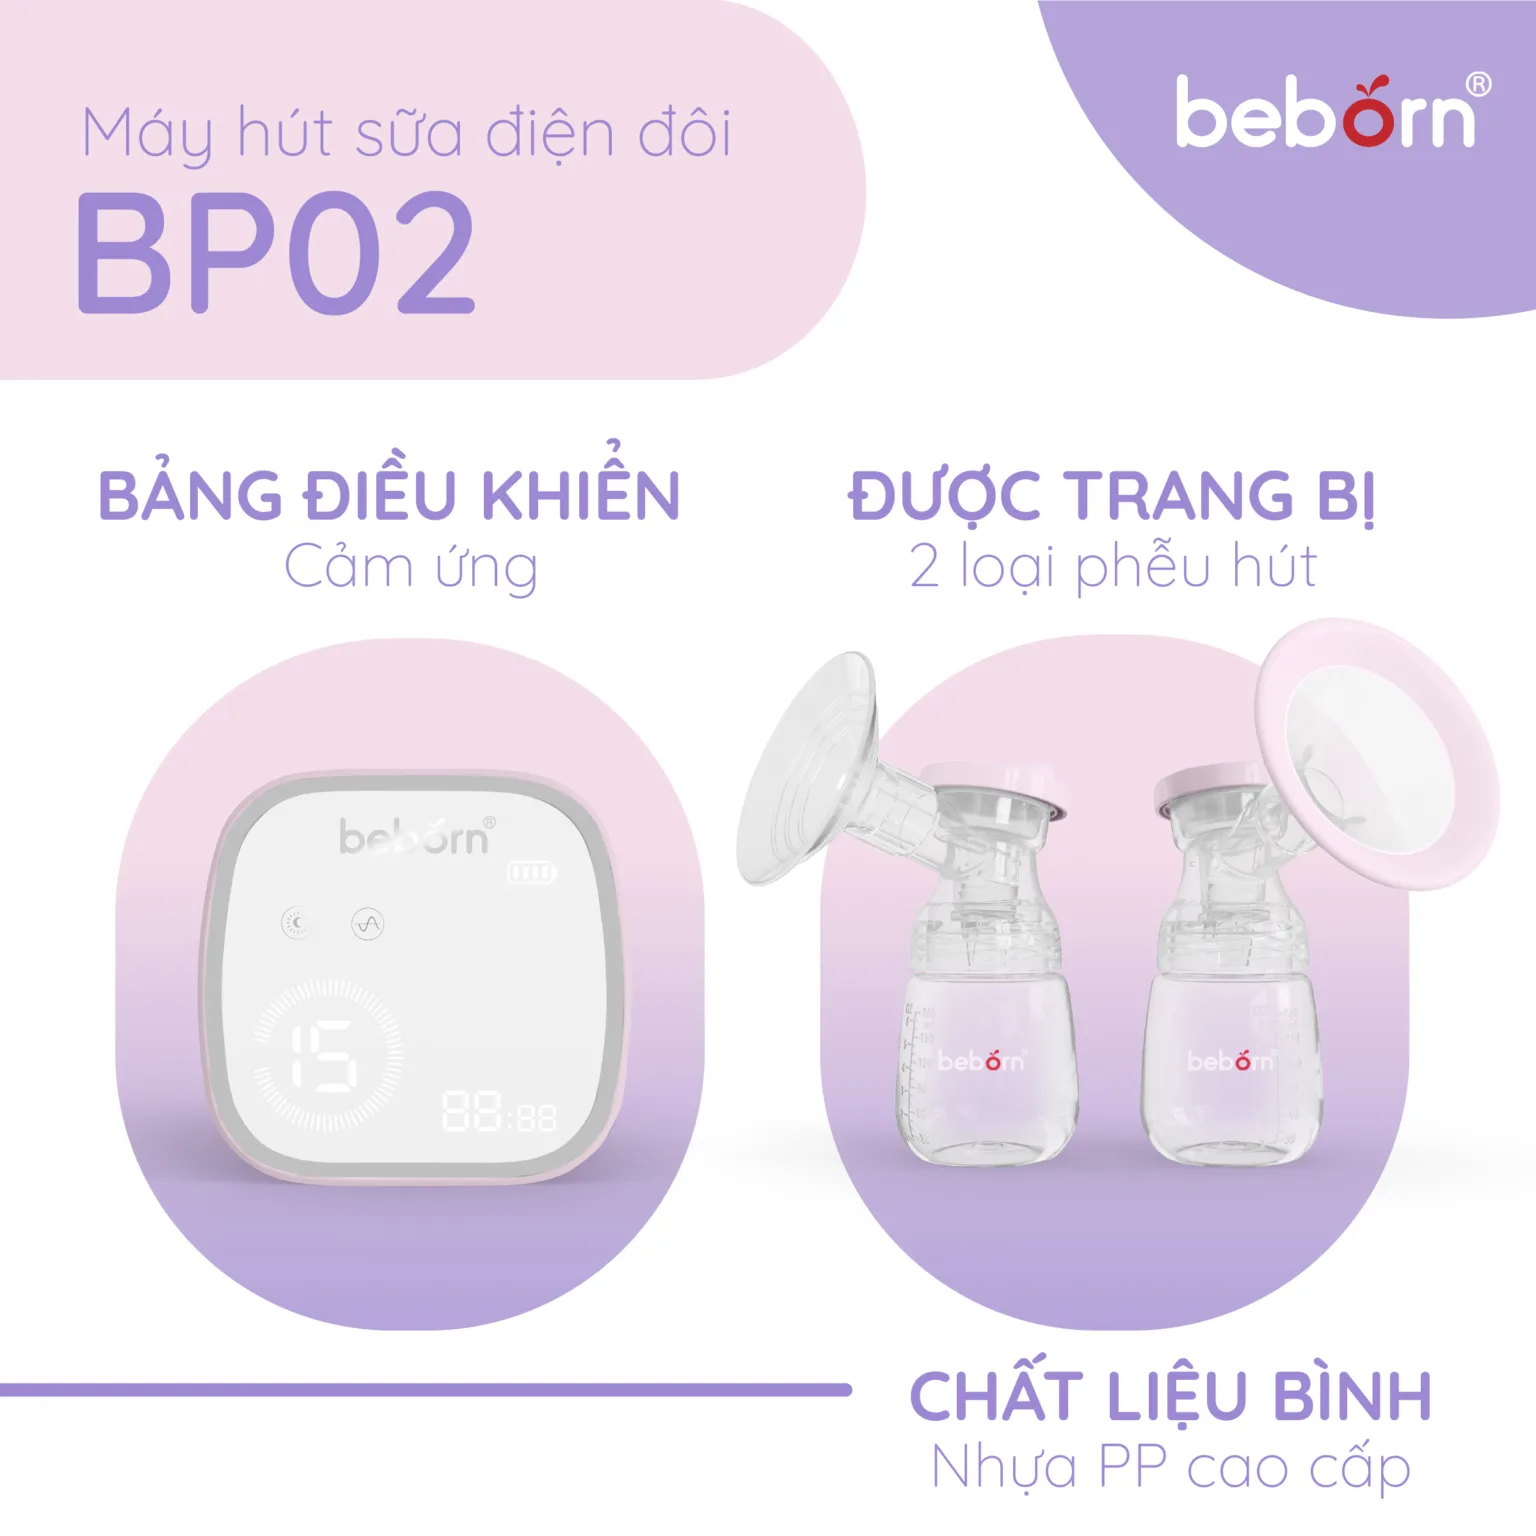 review-may-hut-sua-Beborn-4.png